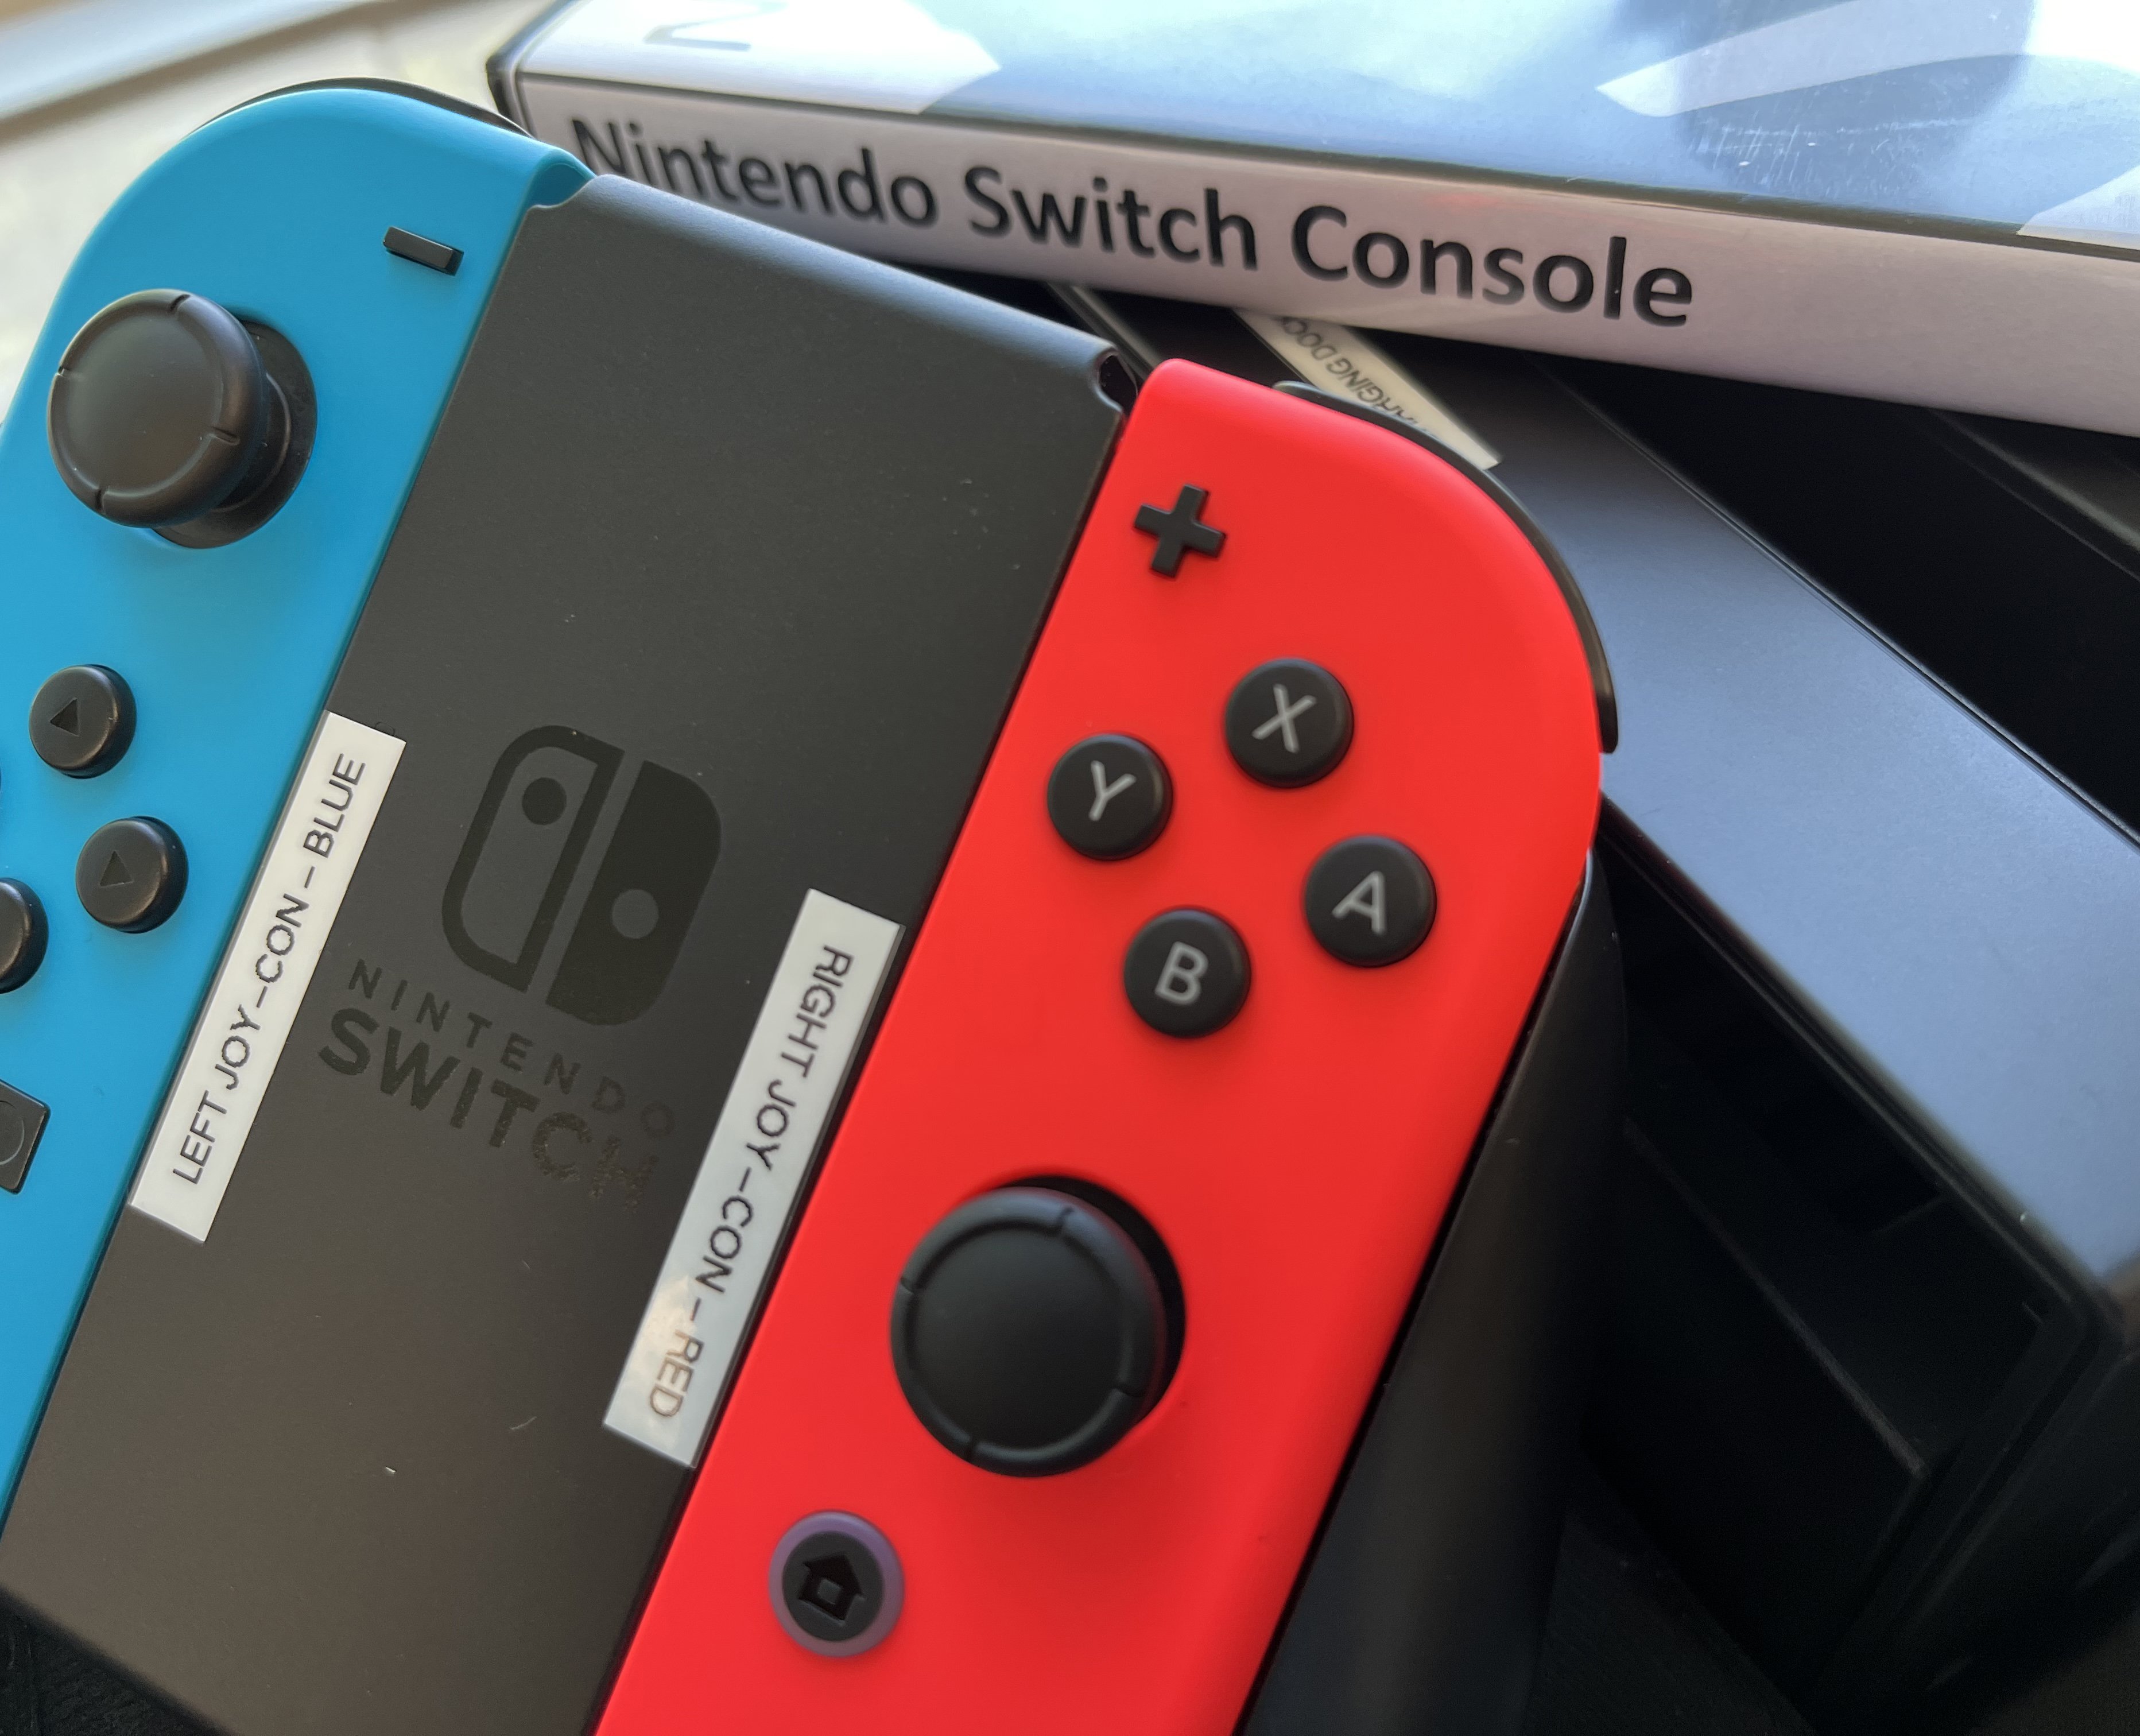 Nintendo Switch Kit